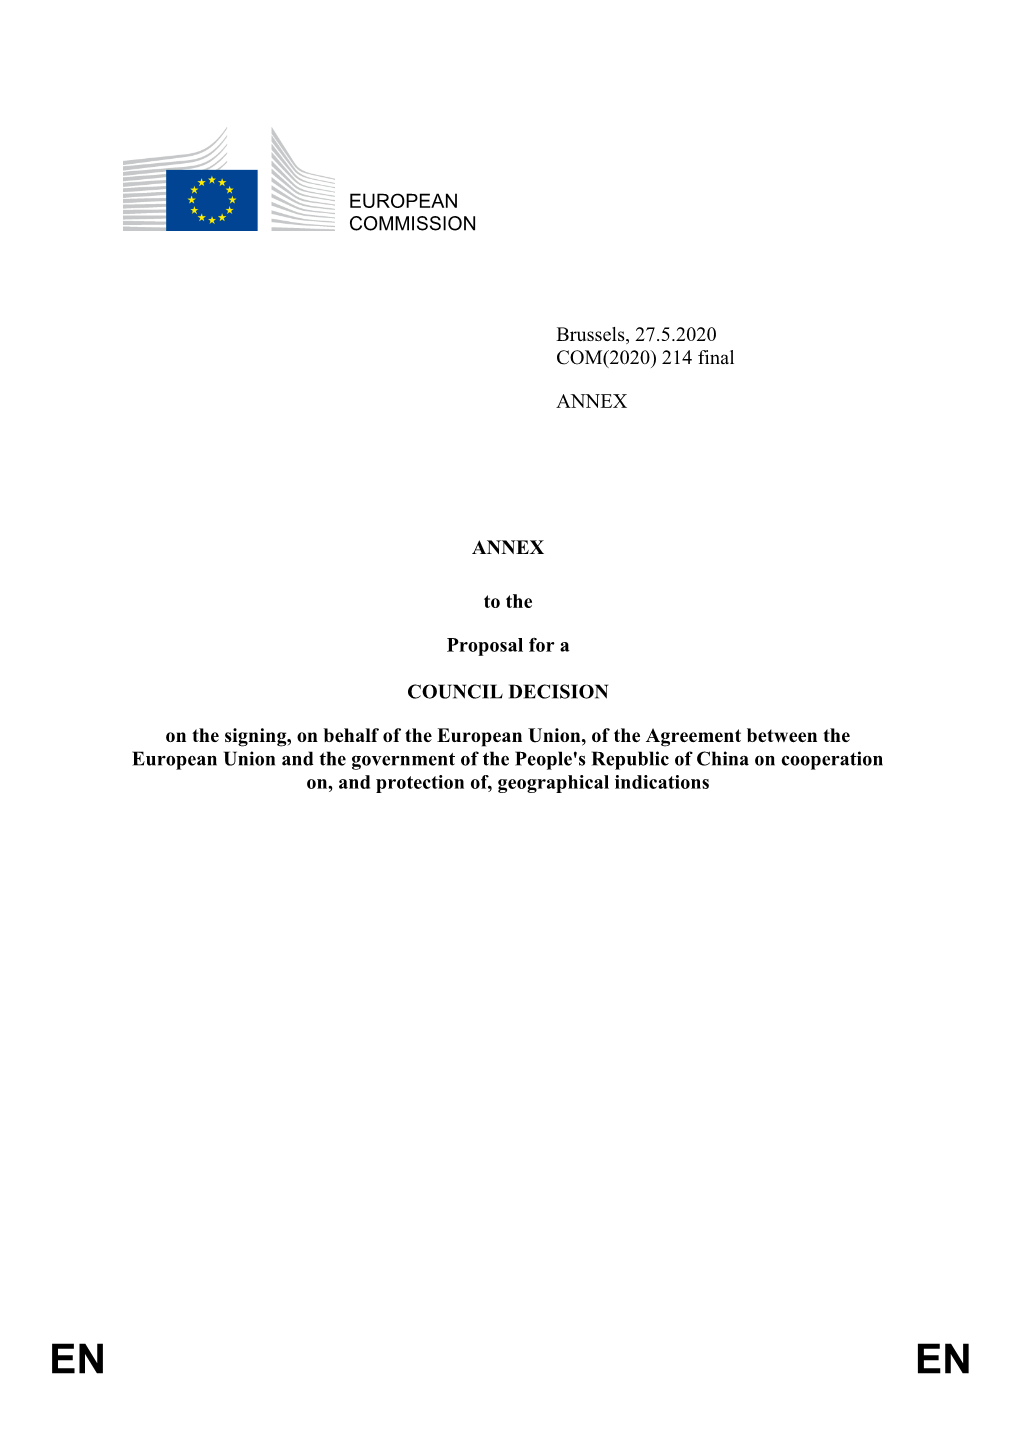 EUROPEAN COMMISSION Brussels, 27.5.2020 COM